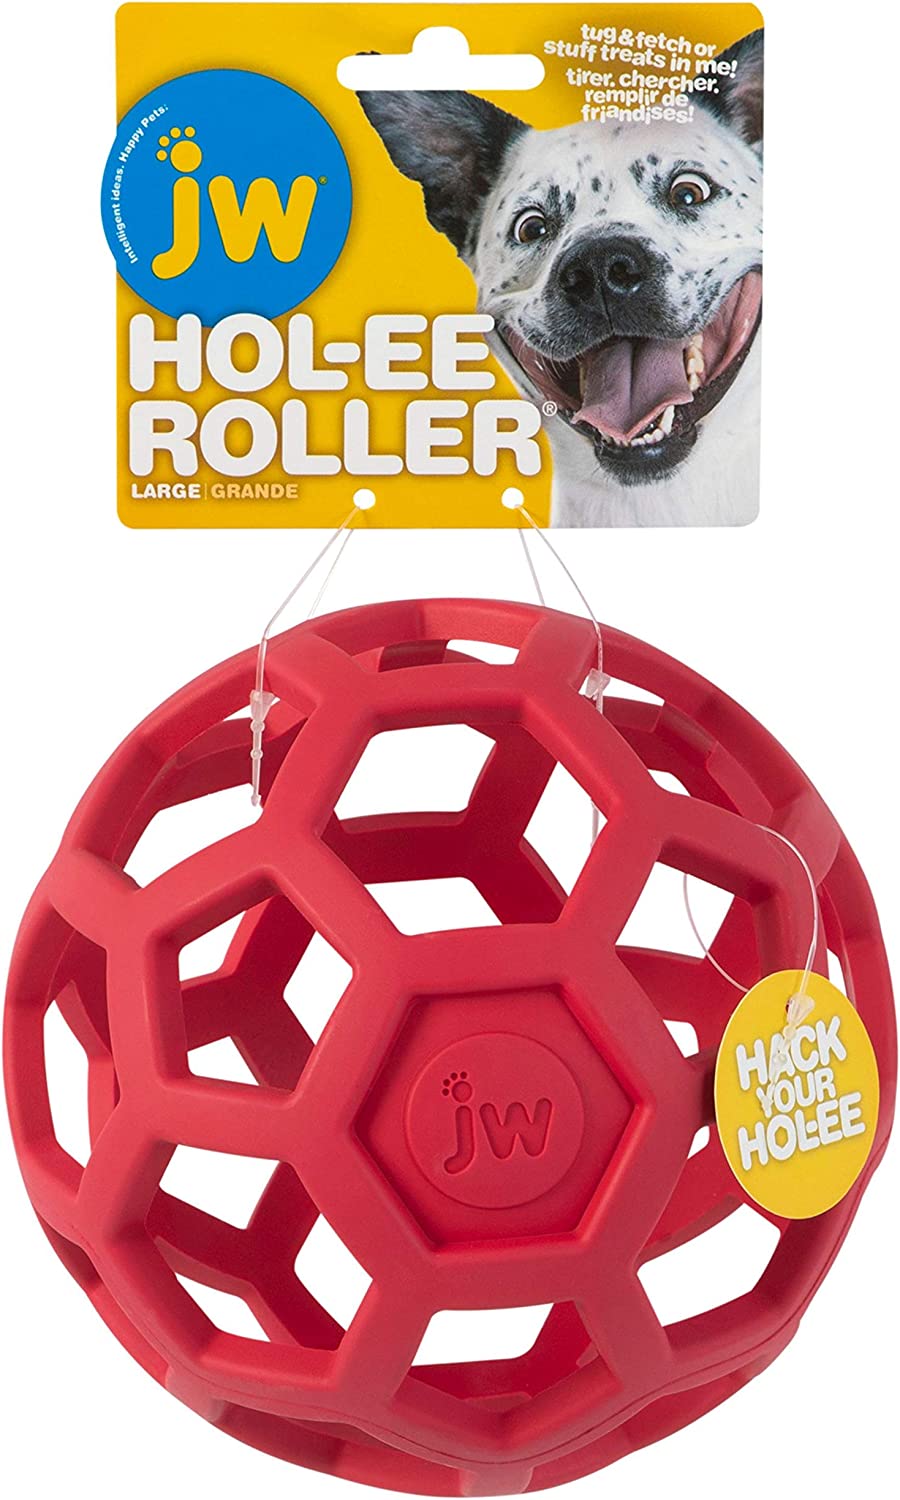 JW | Hol-ee Roller | Dog Toy Toronto